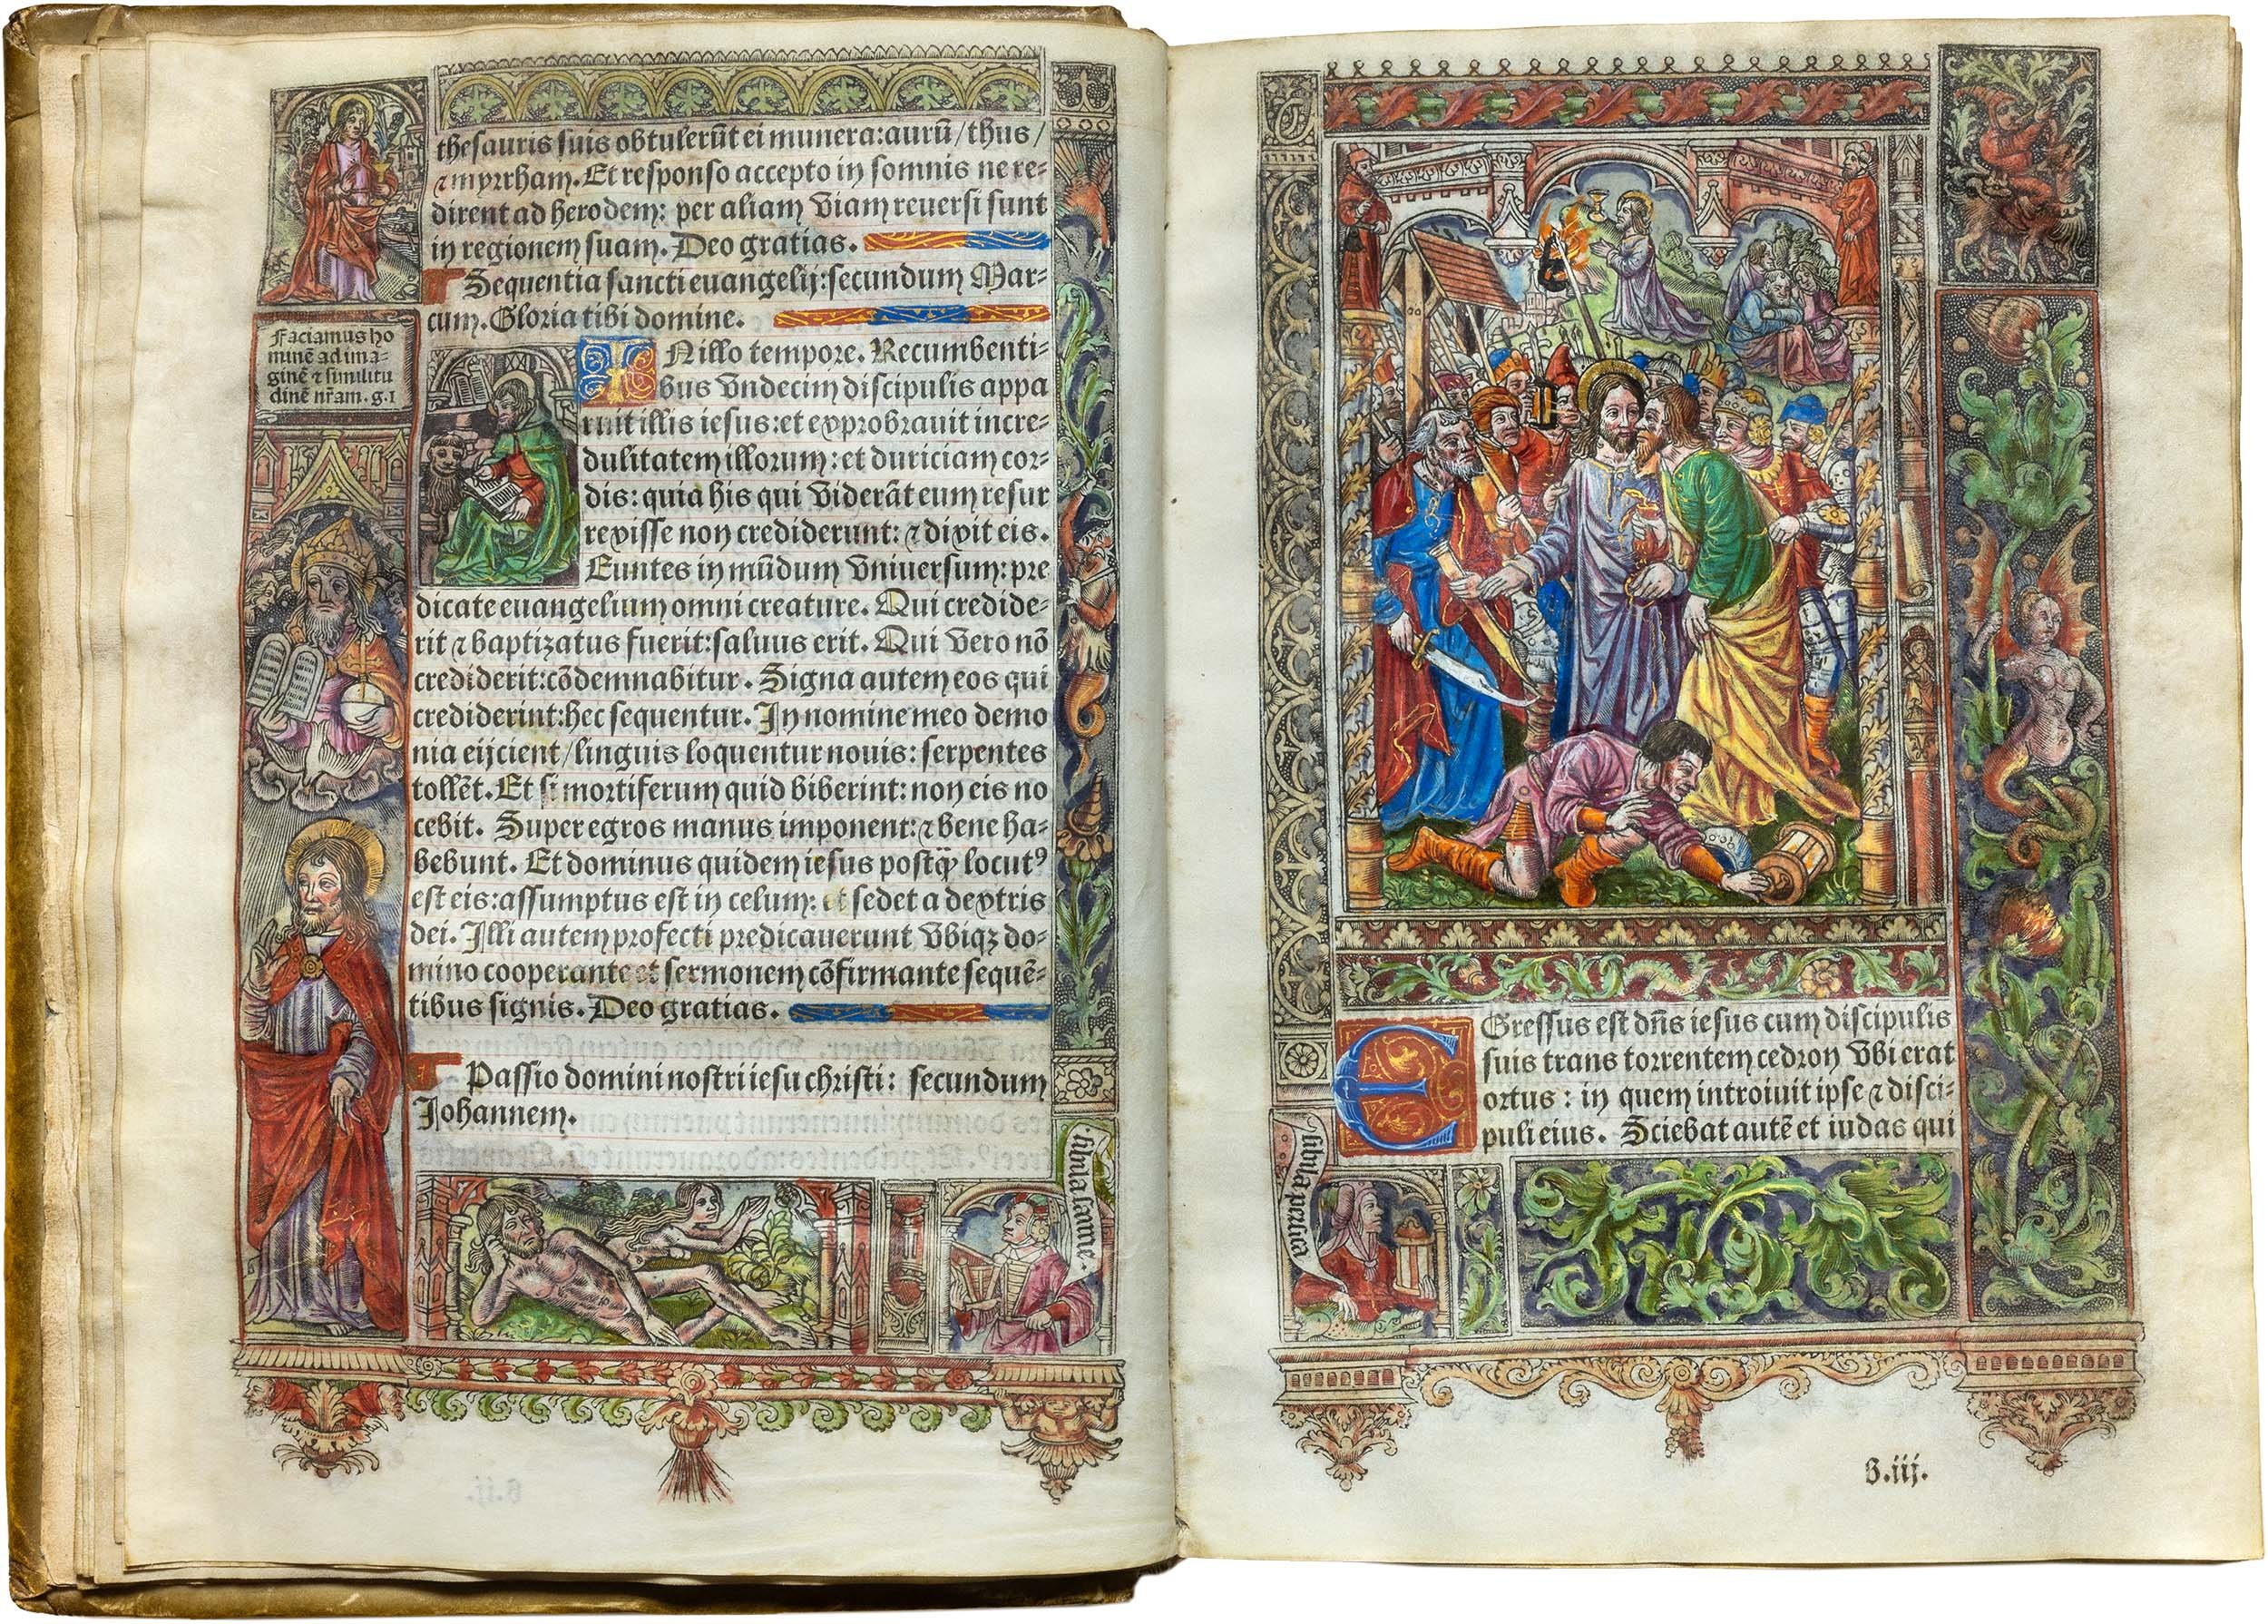 Horae-bmv-31-march-1511-kerver-printed-book-of-hours-illuminated-copy-vellum-14.jpg